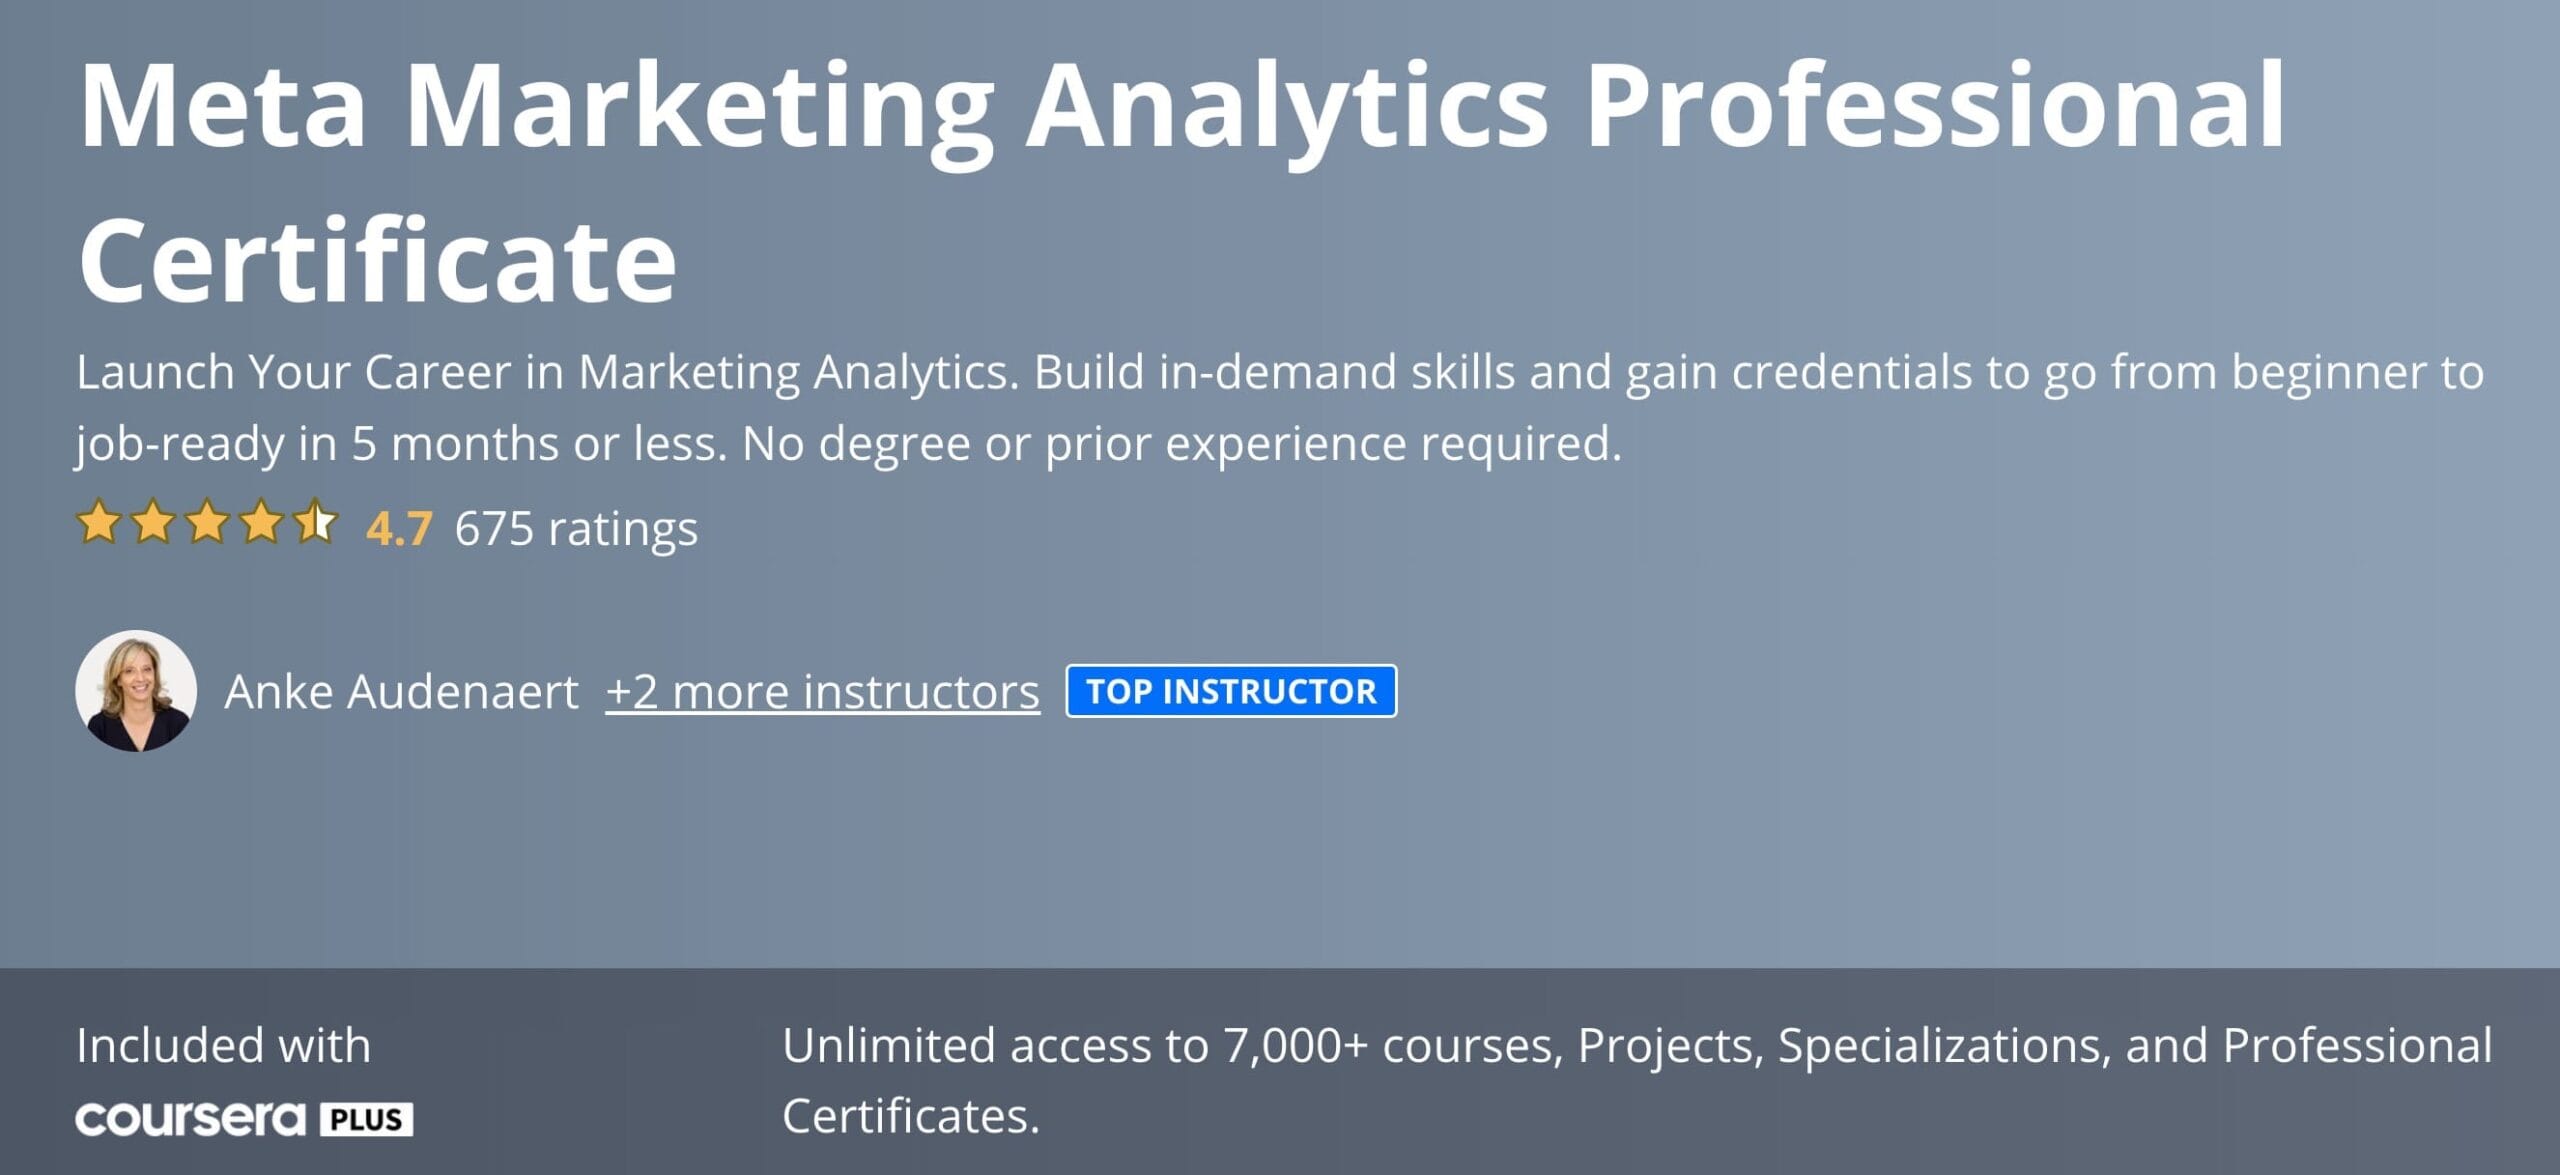 Meta Marketing Analytics Professional Certificate